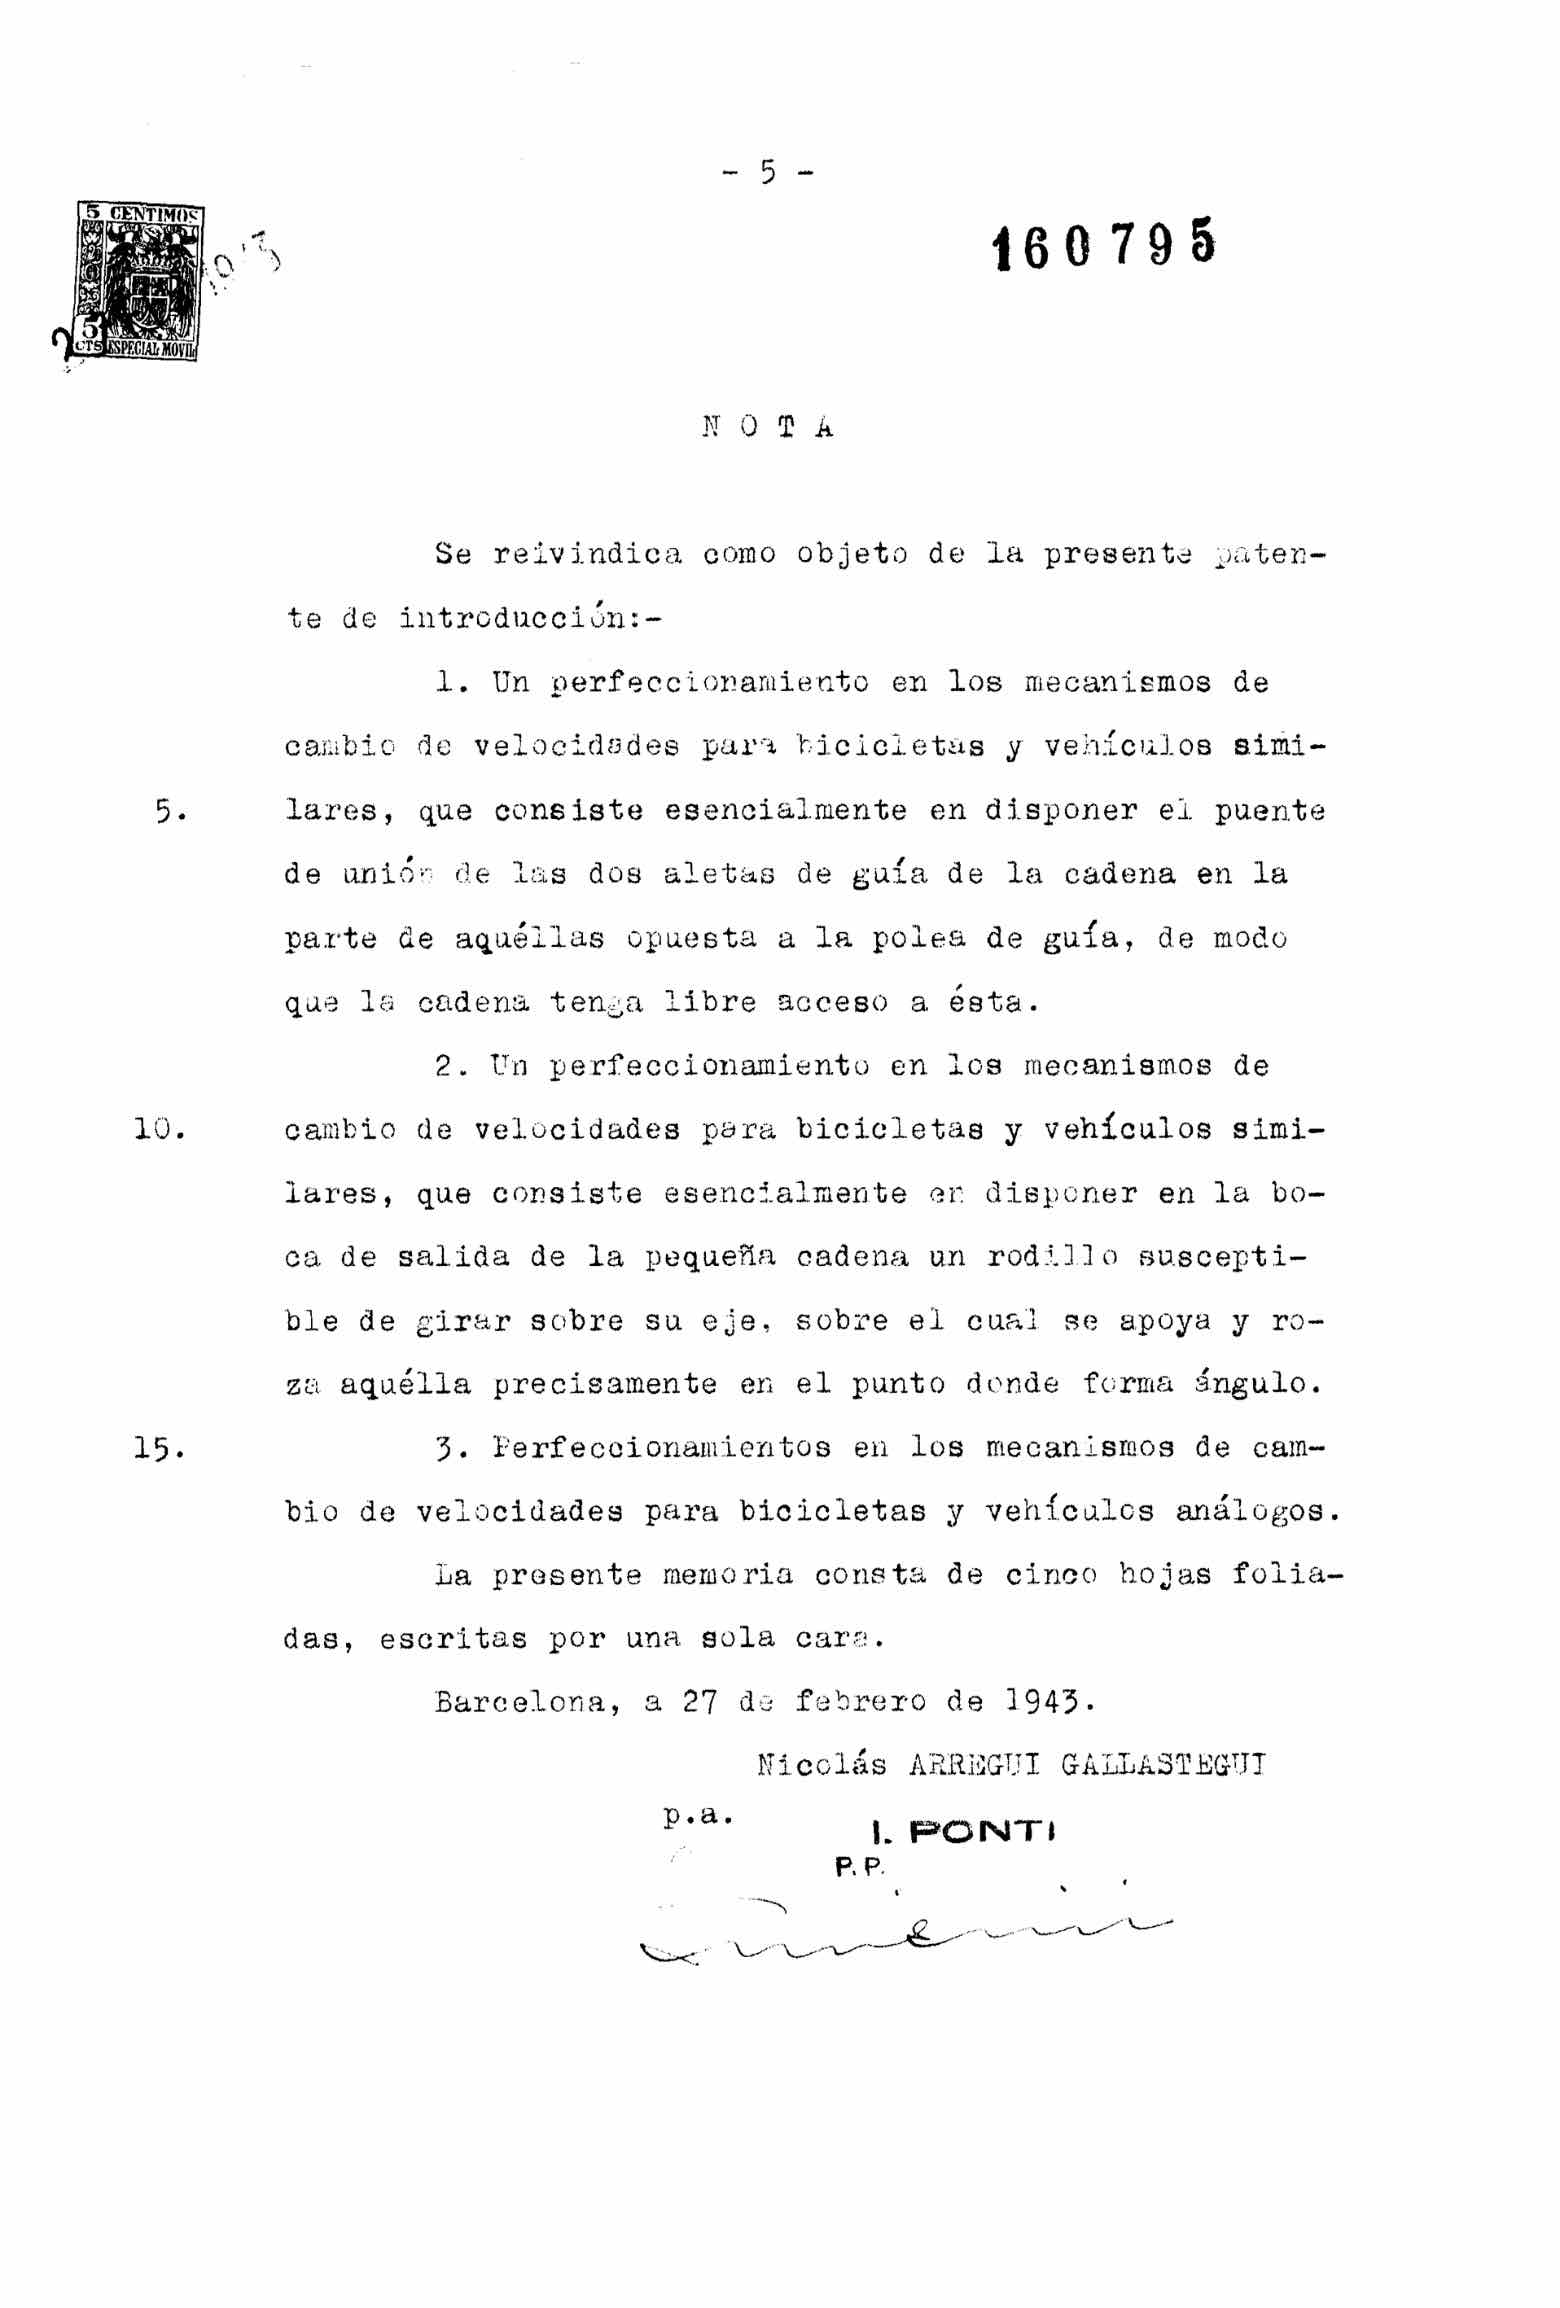 Spanish Patent 160,795 - Zeus scan 5 main image